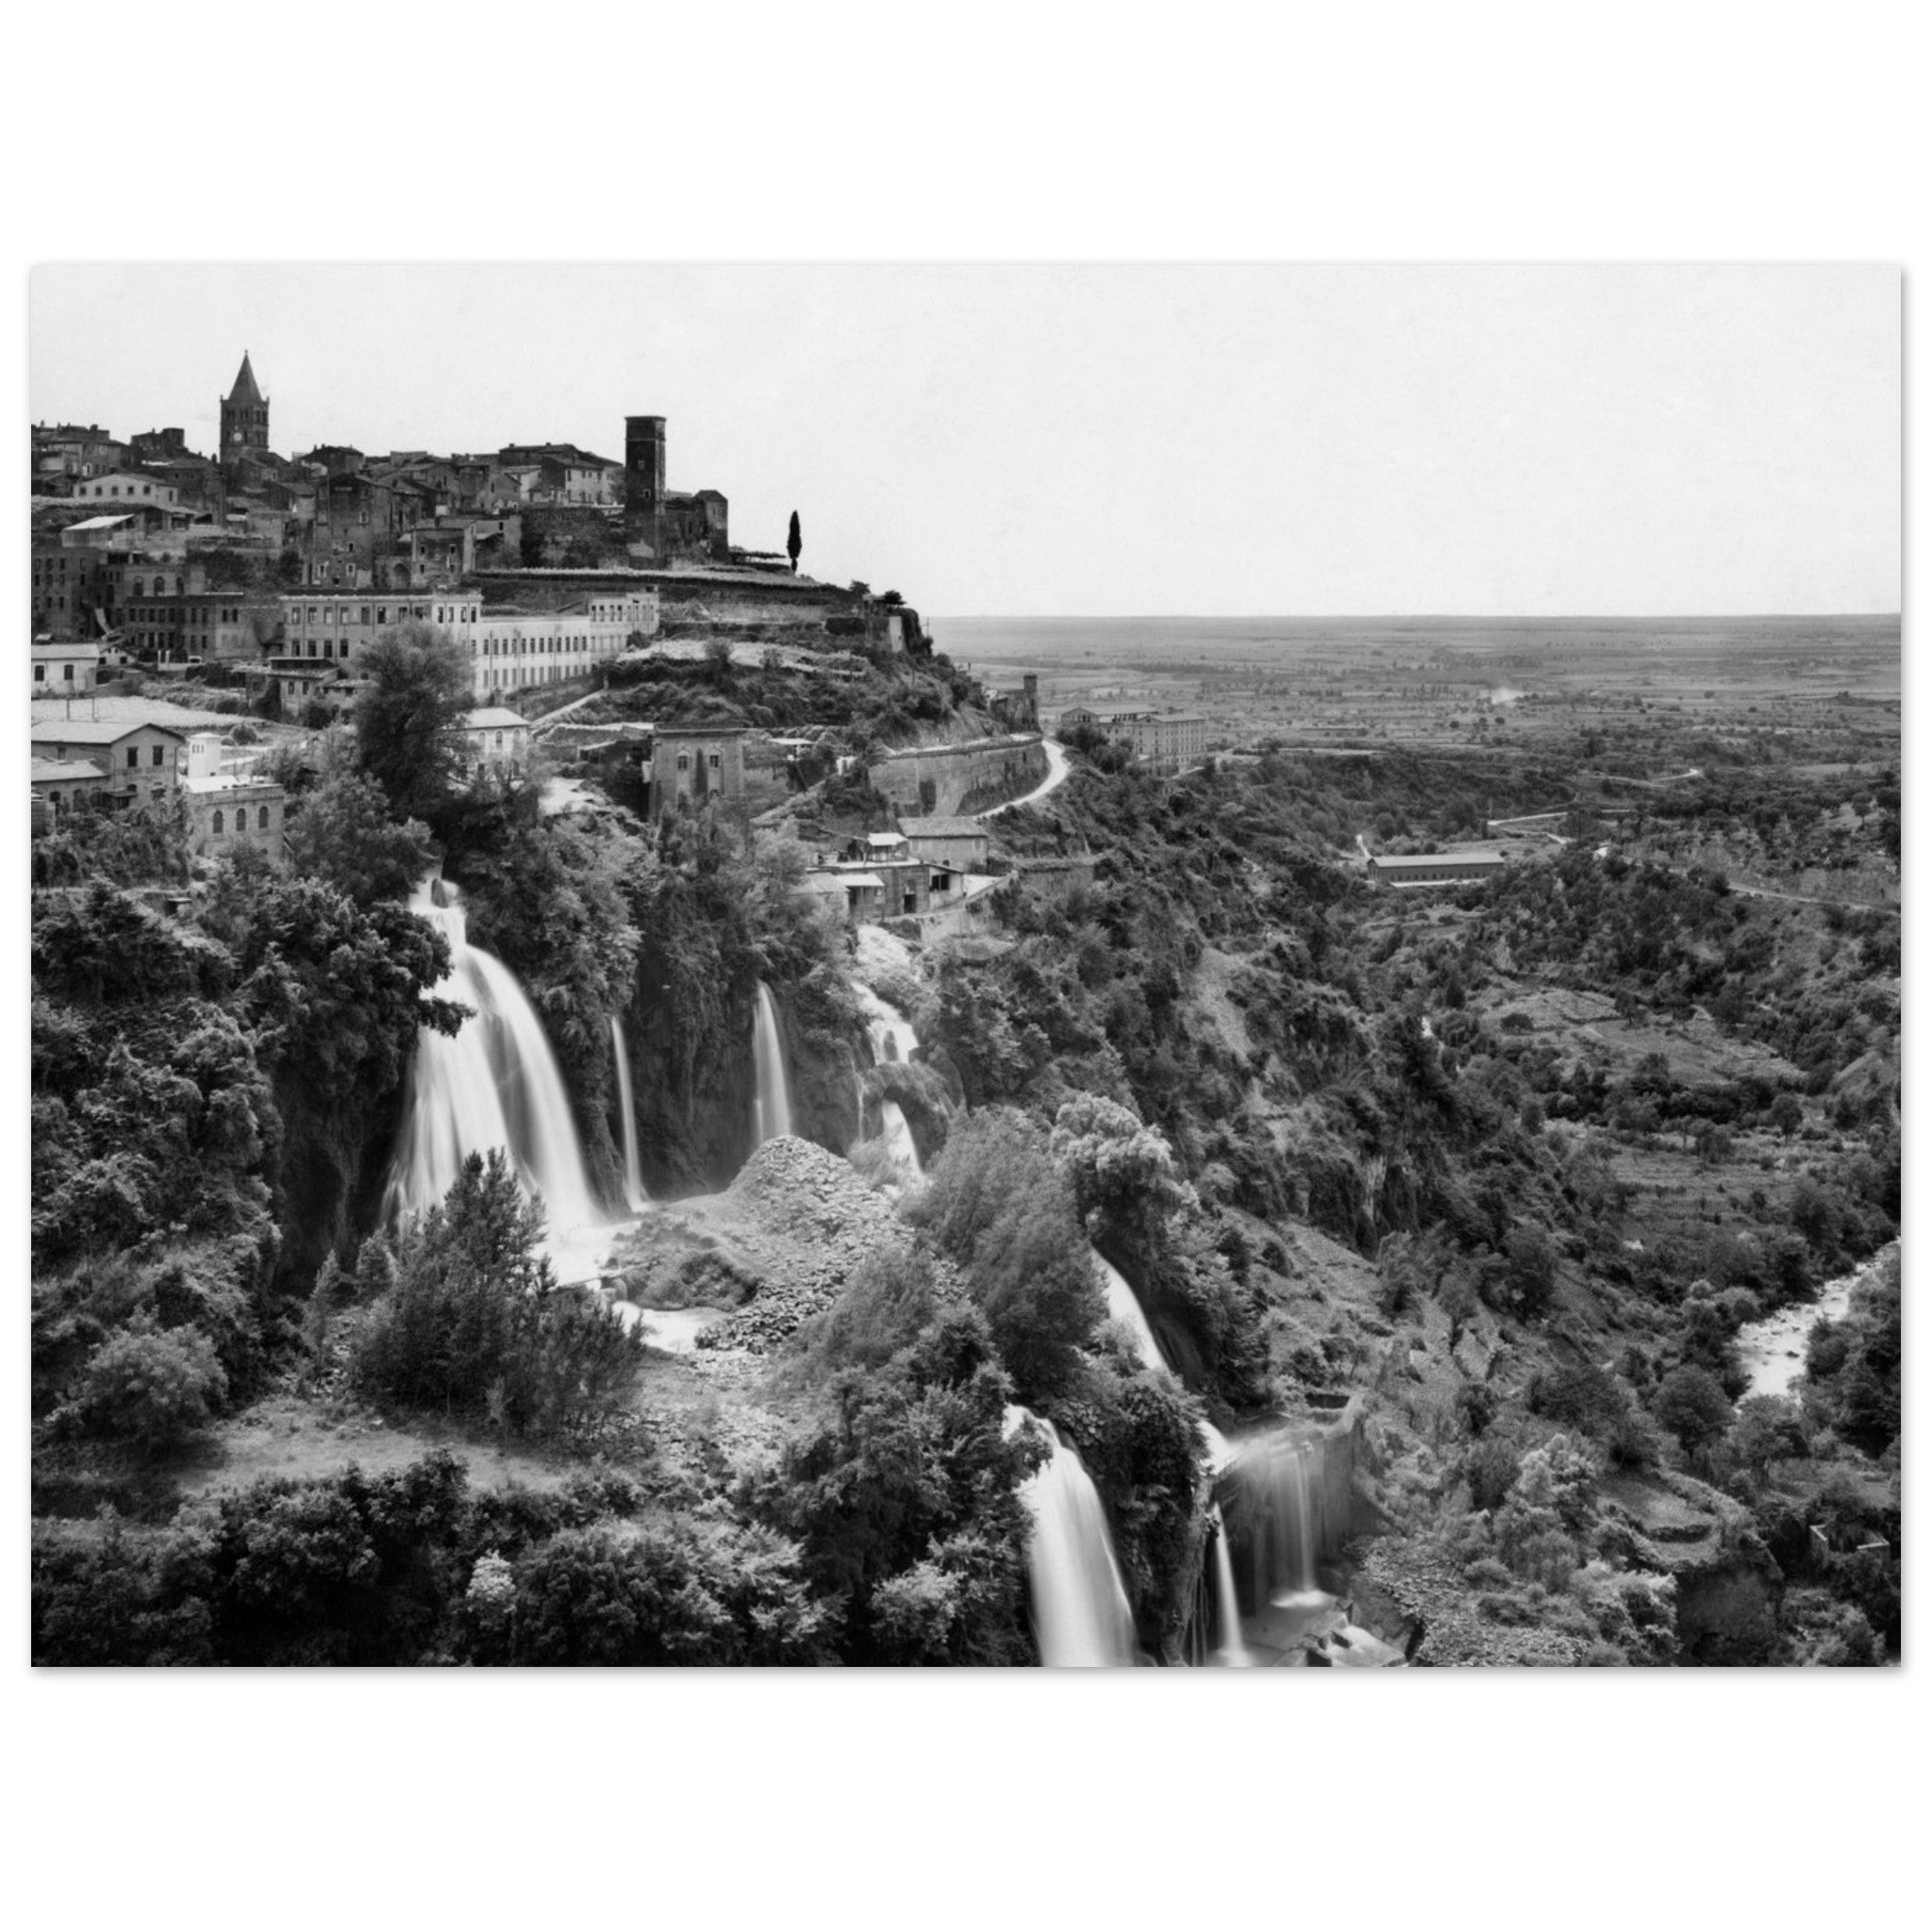 3866098 Tivoli With Waterfalls, 1957